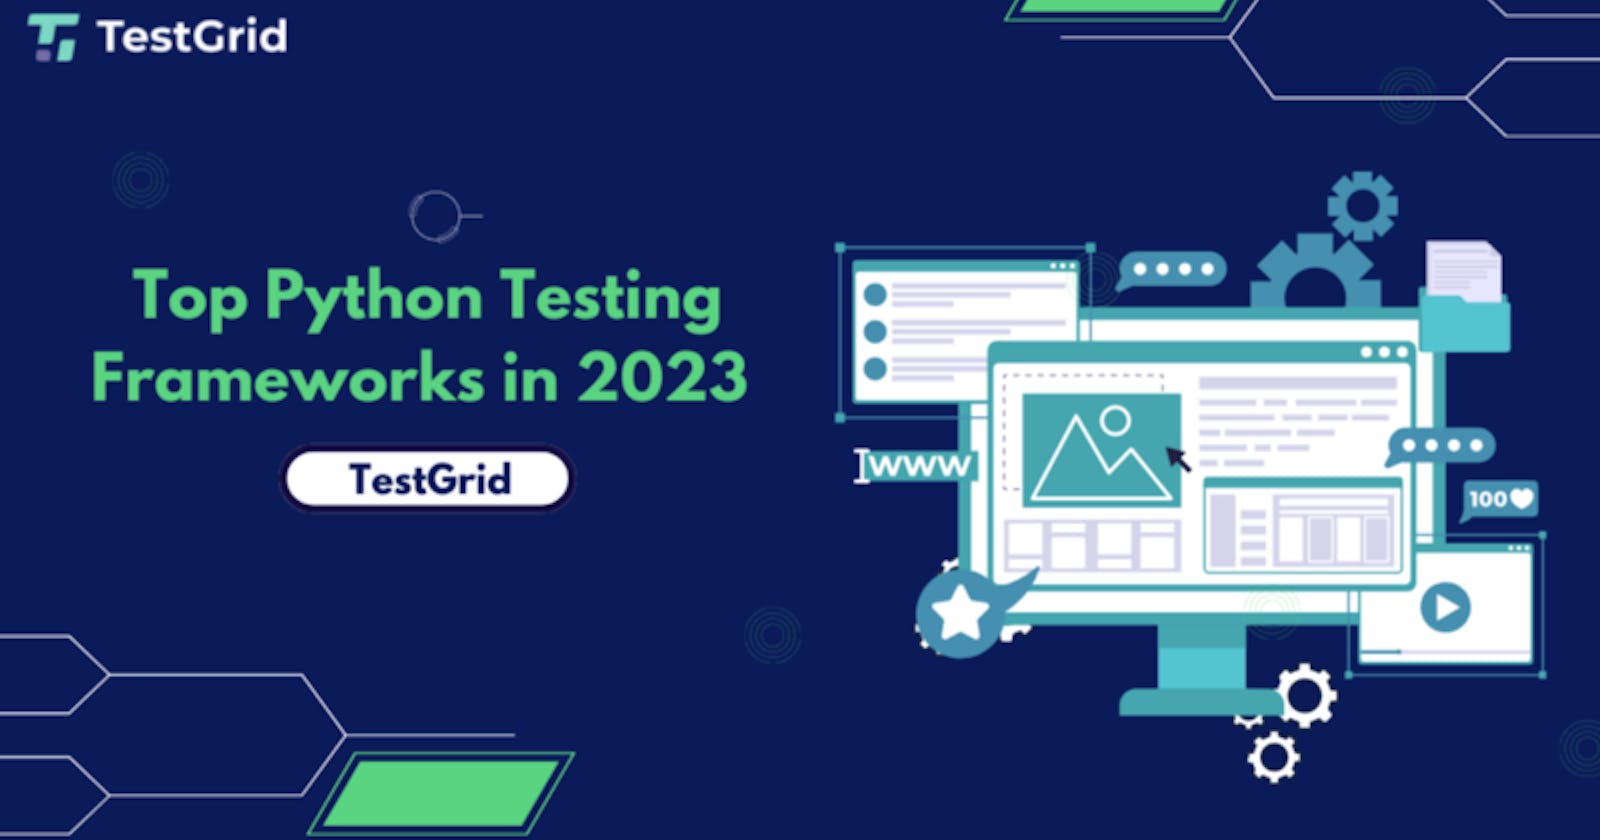 Top Python Testing Framework in 2023 by TestGrid